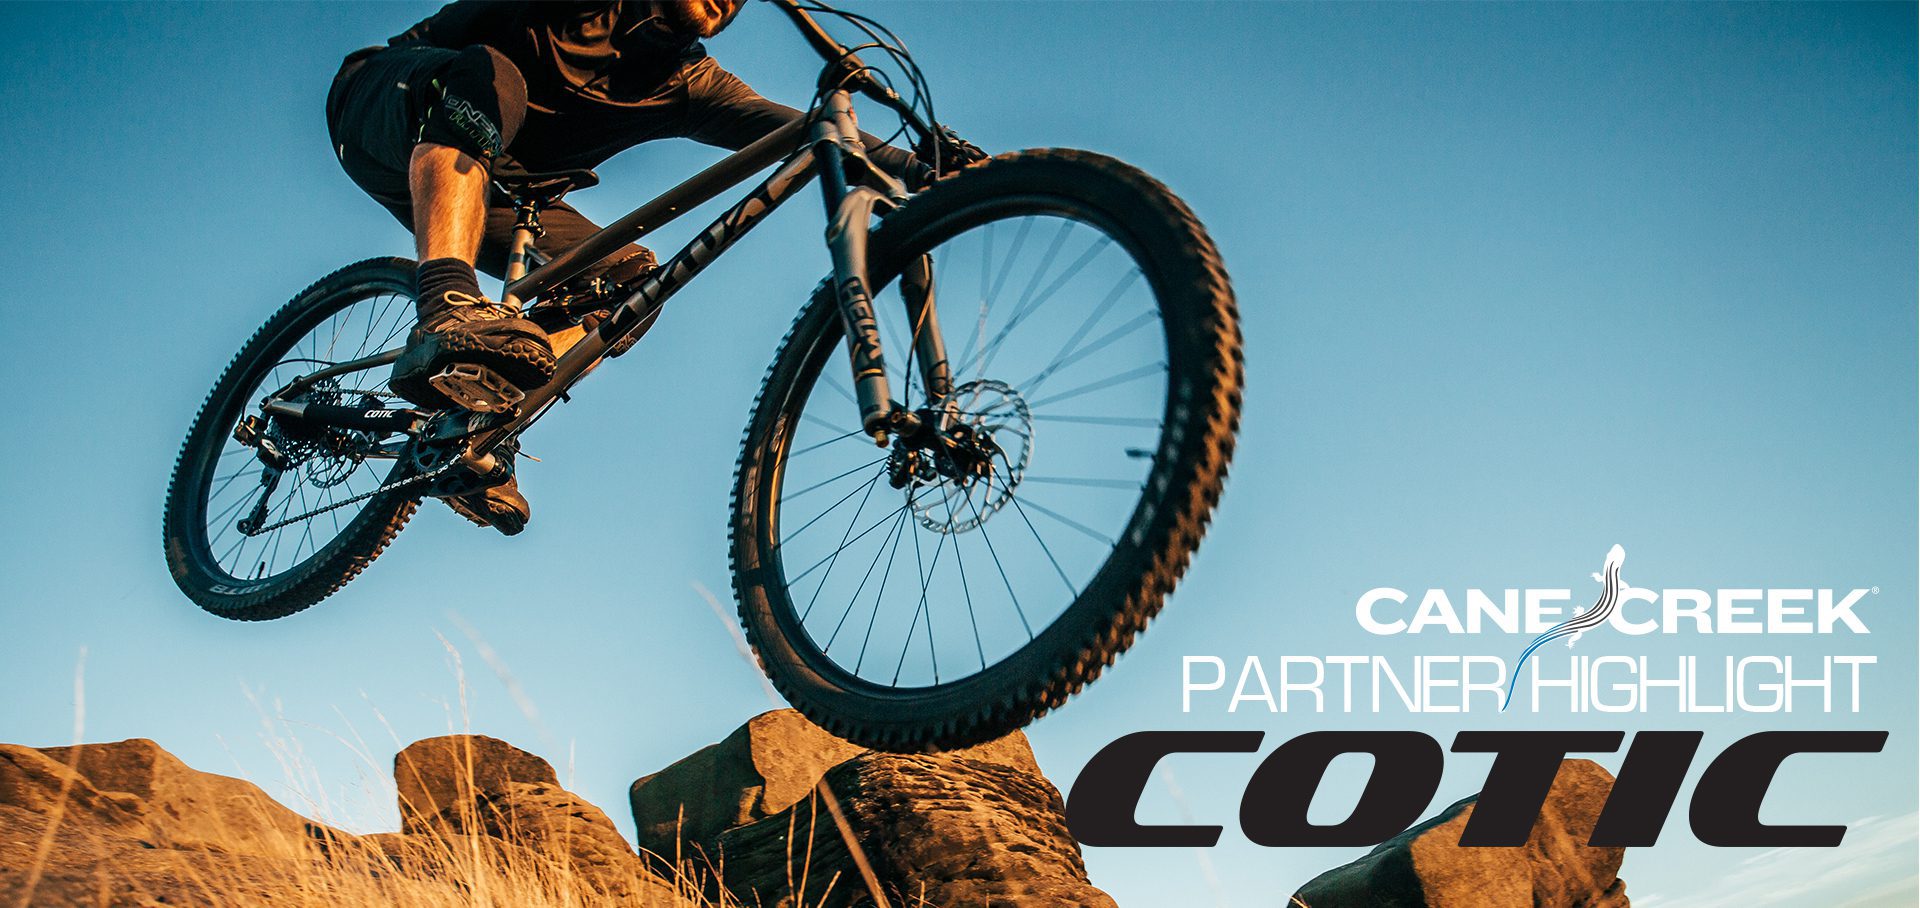 Cane Creek Partner Highlight: Cotic Bikes